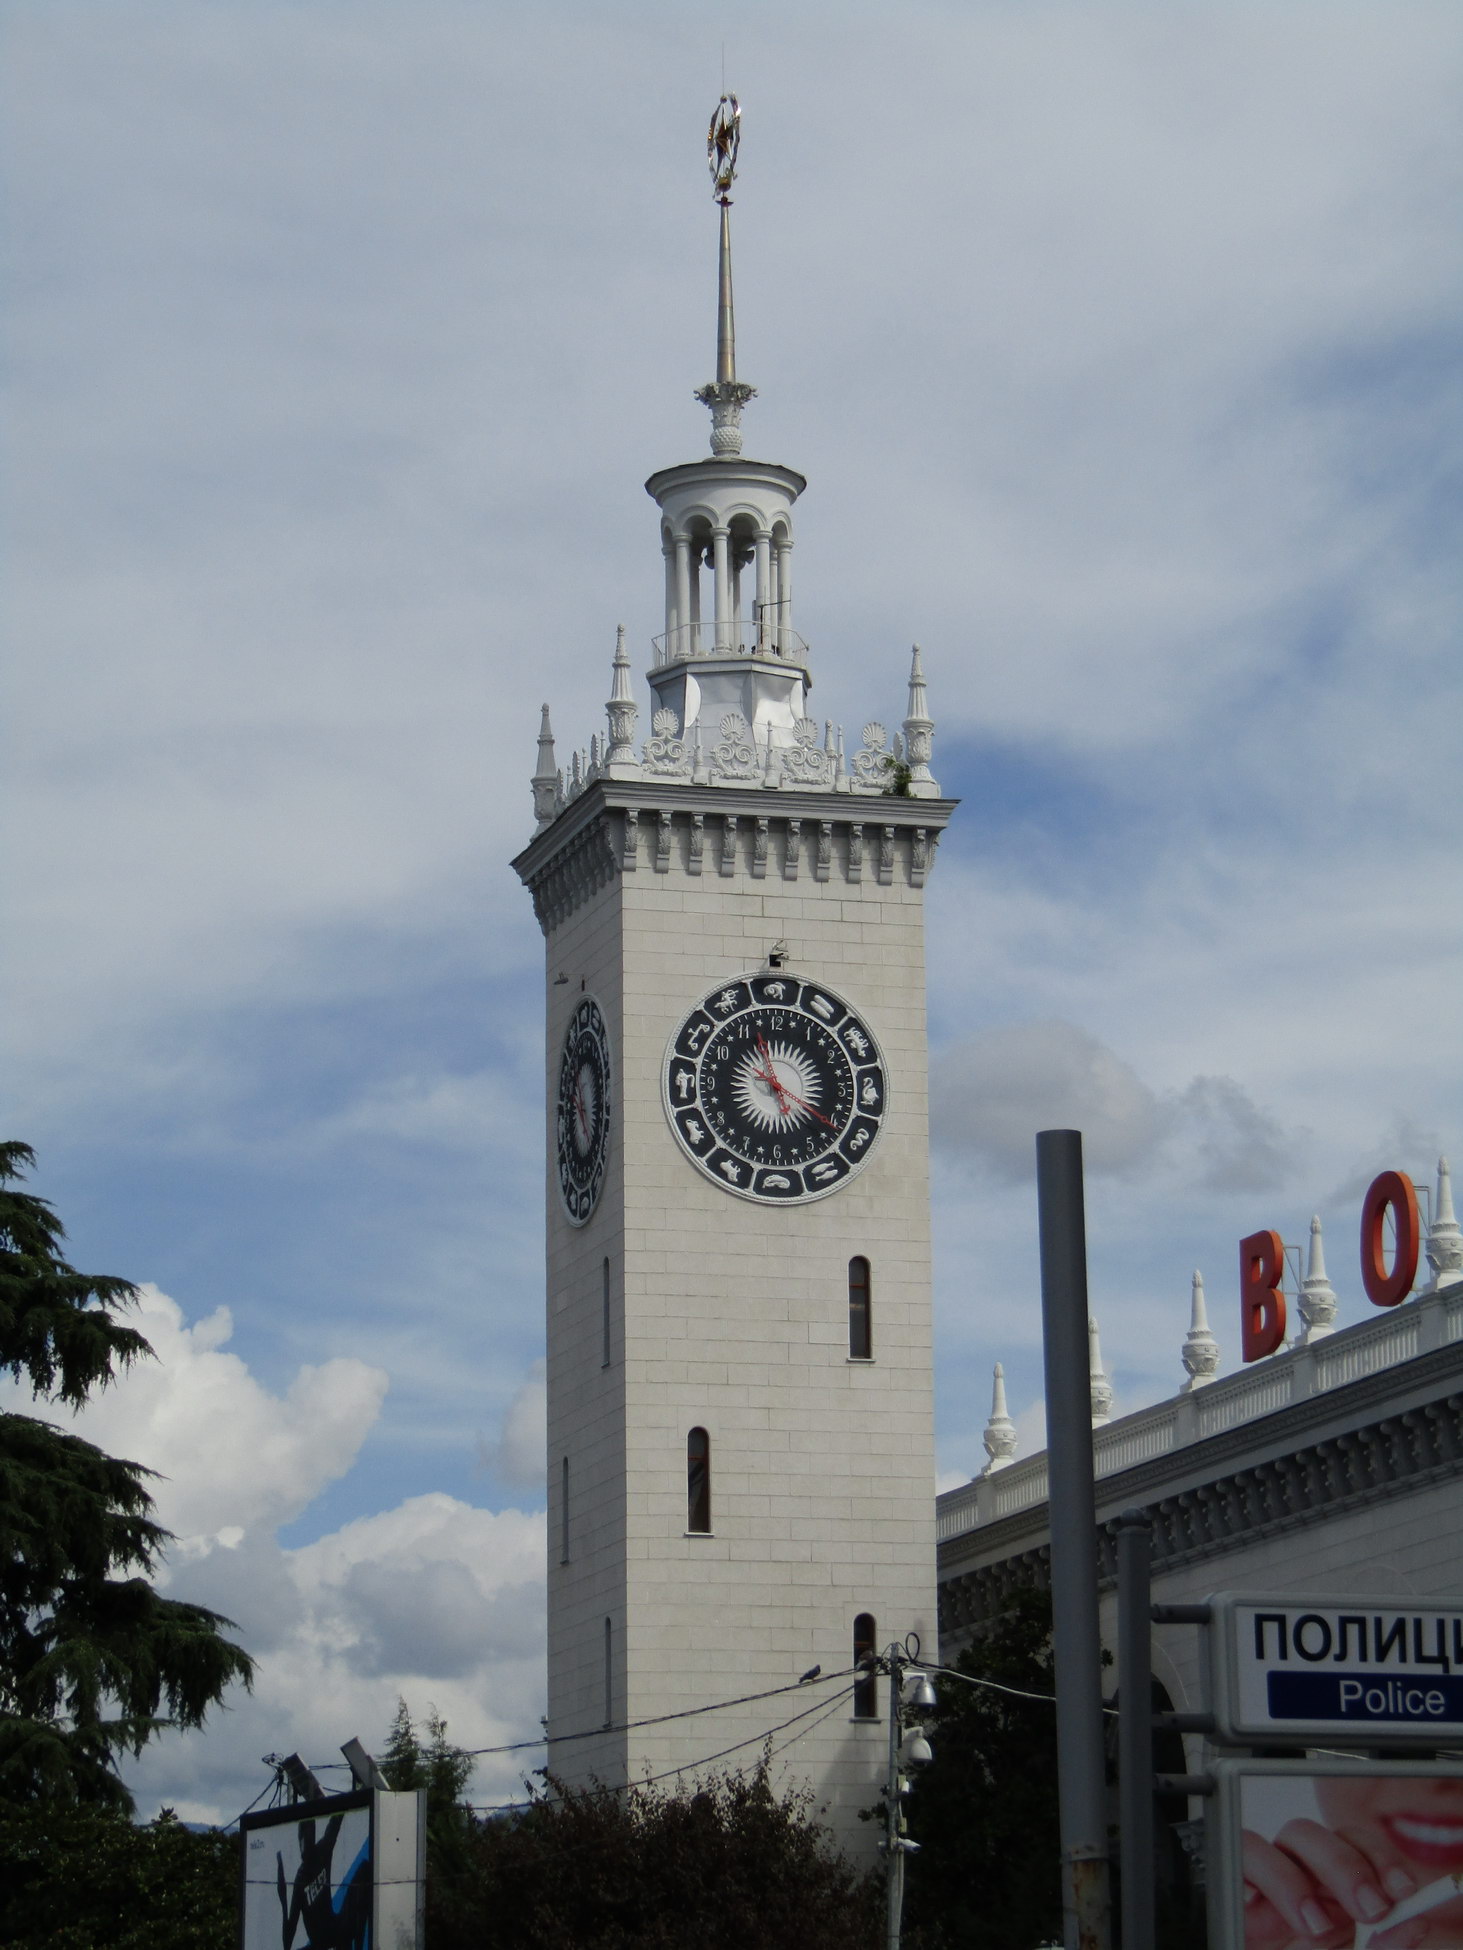 Который час в сочи. ЖД вокзал Сочи башня. ЖД вокзал Сочи циферблат. Башня вокзала часы Сочи. ЖД вокзал Сочи башня с часами.